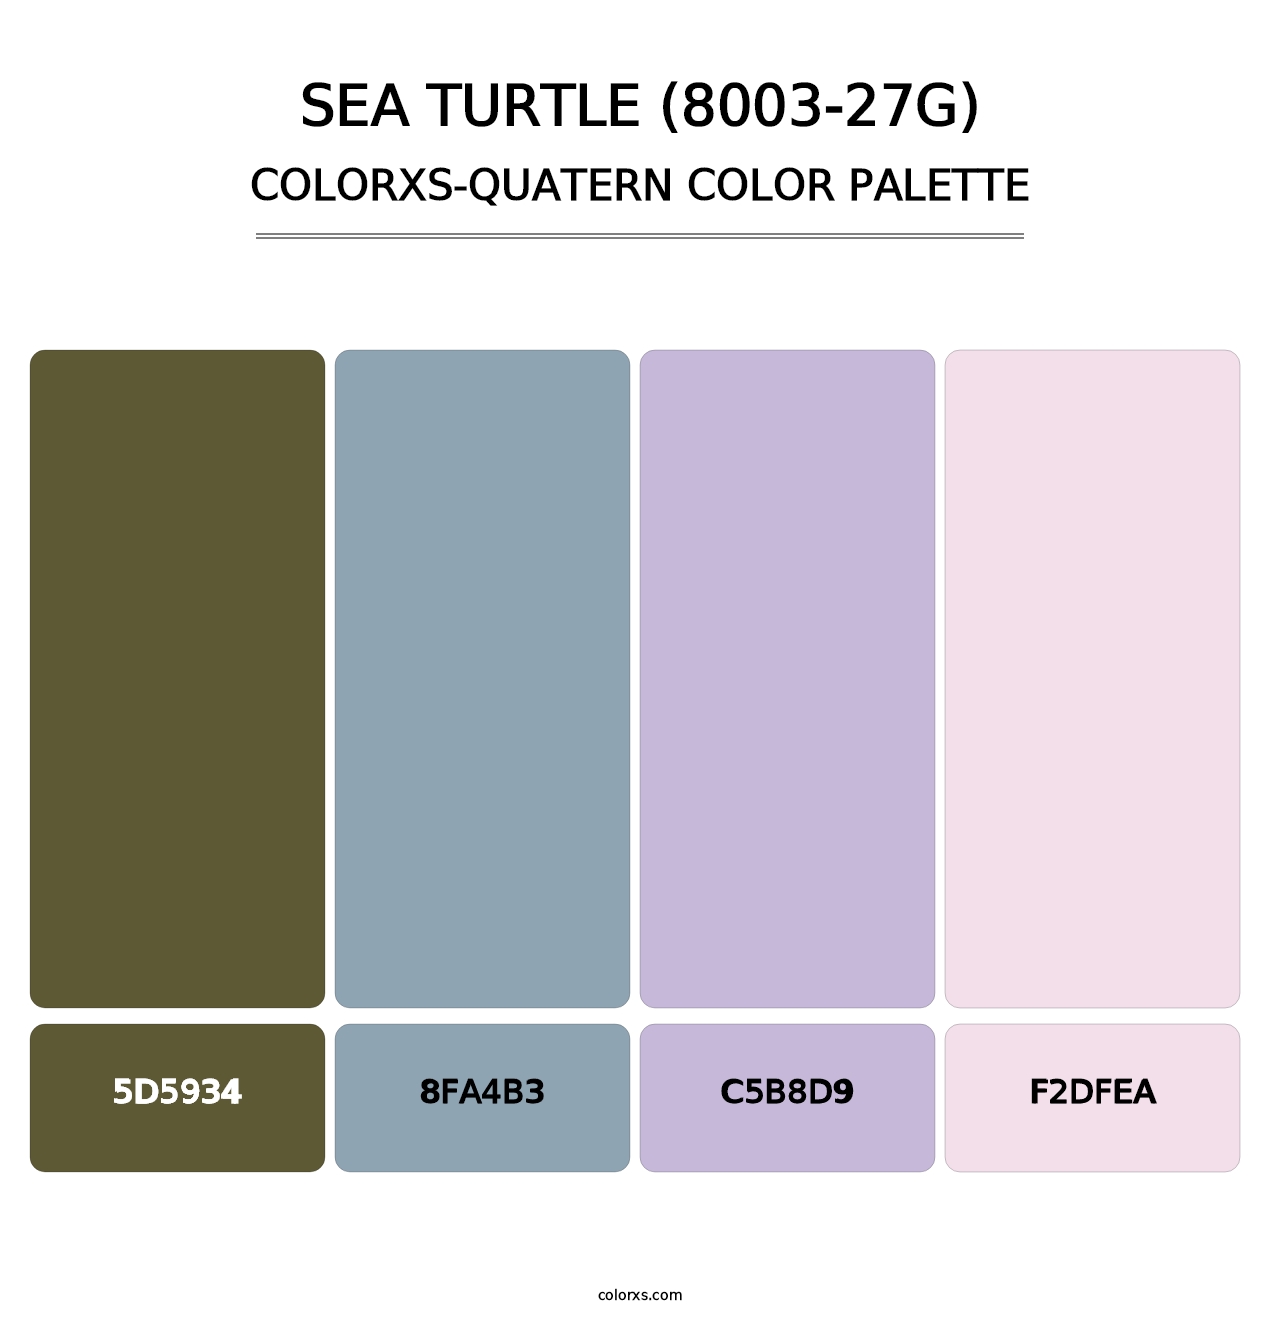 Sea Turtle (8003-27G) - Colorxs Quatern Palette